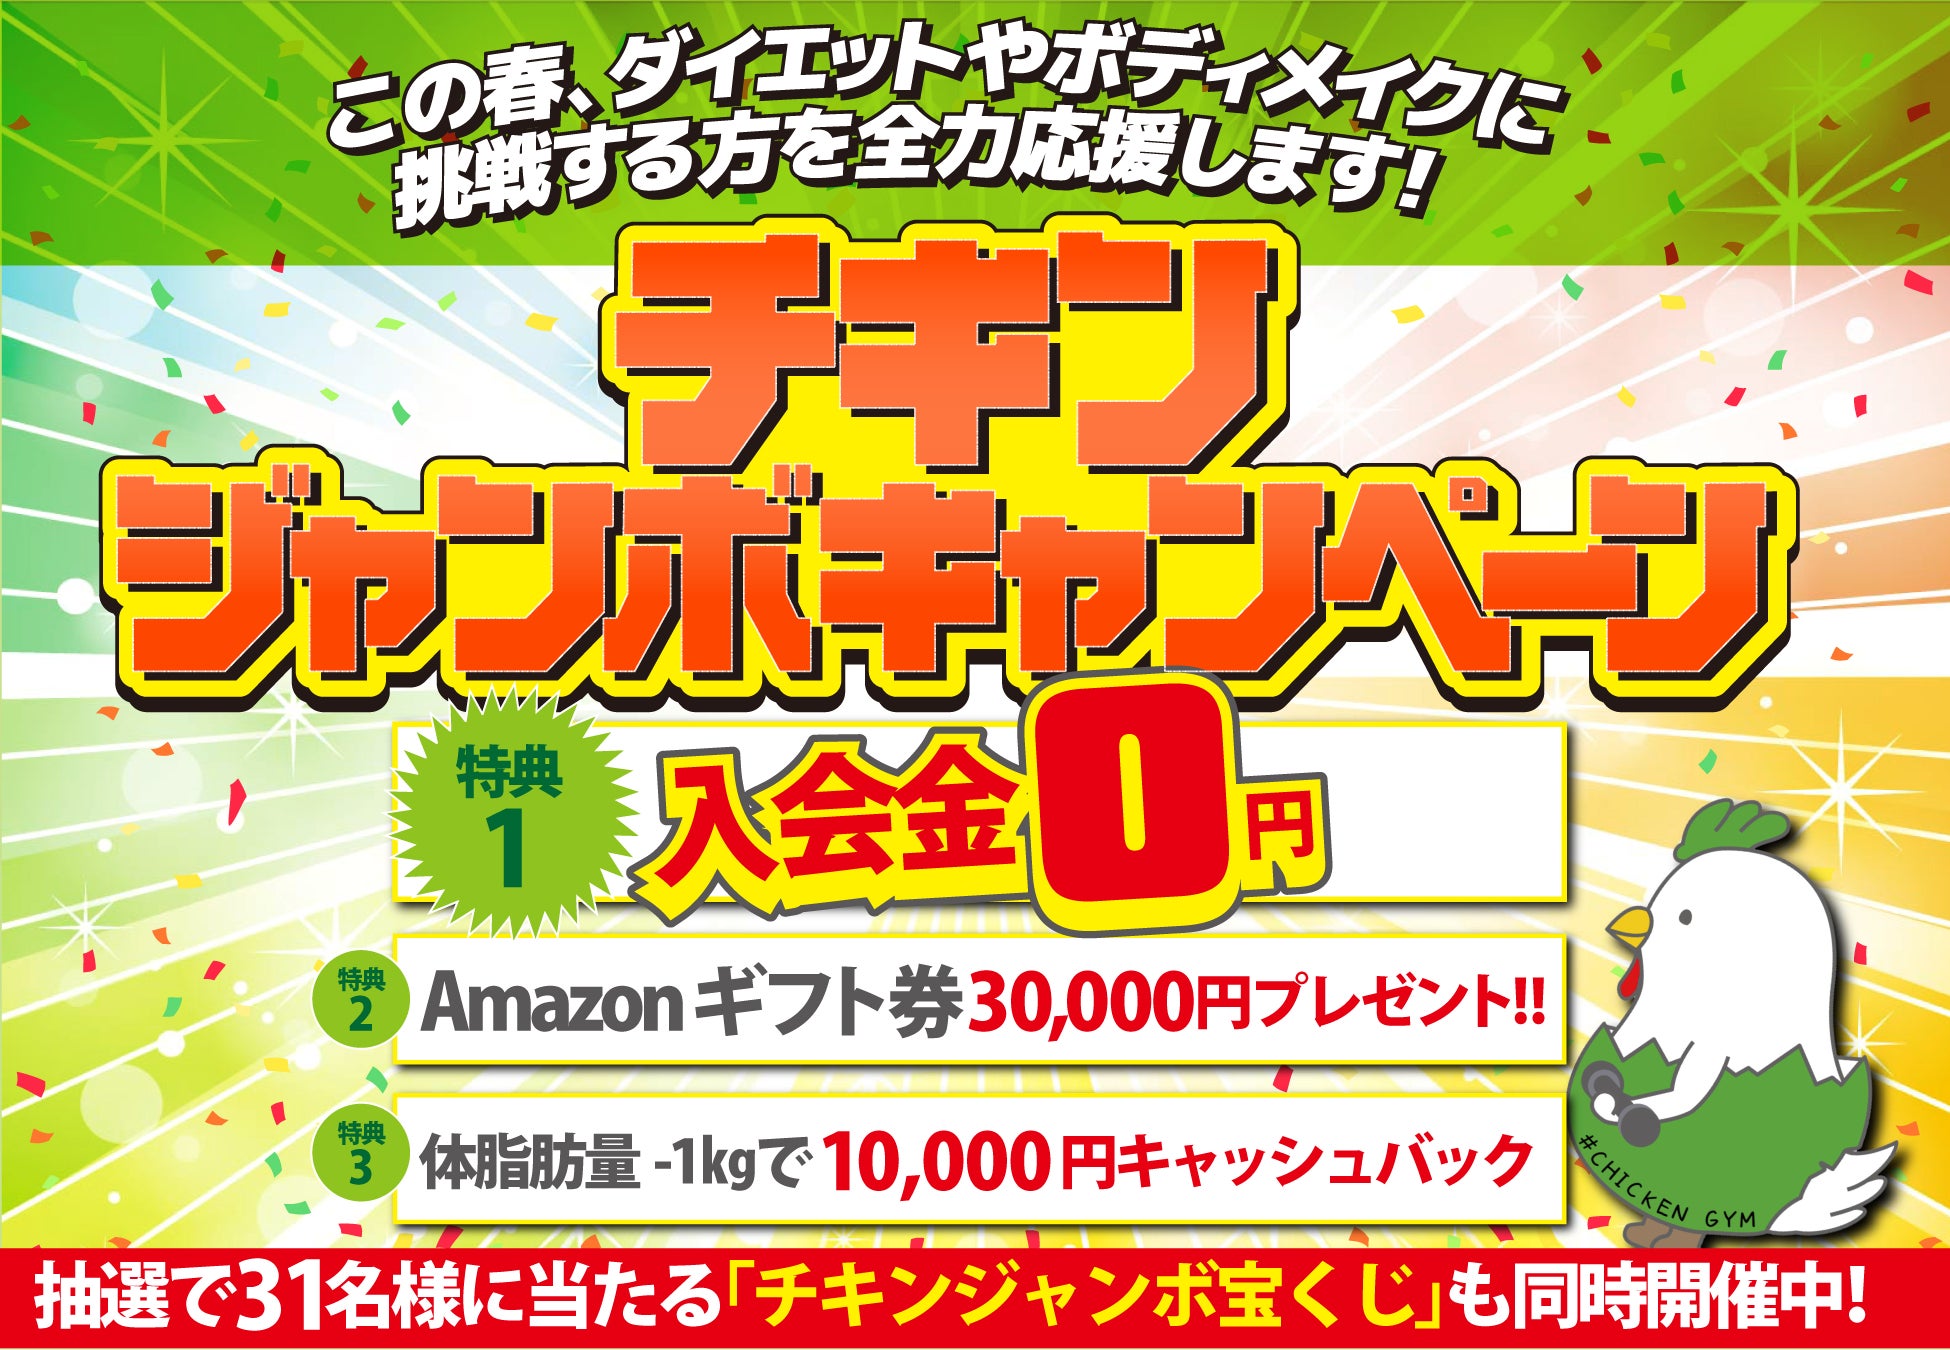 Wチャンス！最大85,000円お得になる「チキンジャンボキャンペーン」と、抽選で31名様に当たる「チキンジャンボ宝くじ」同時開催決定。